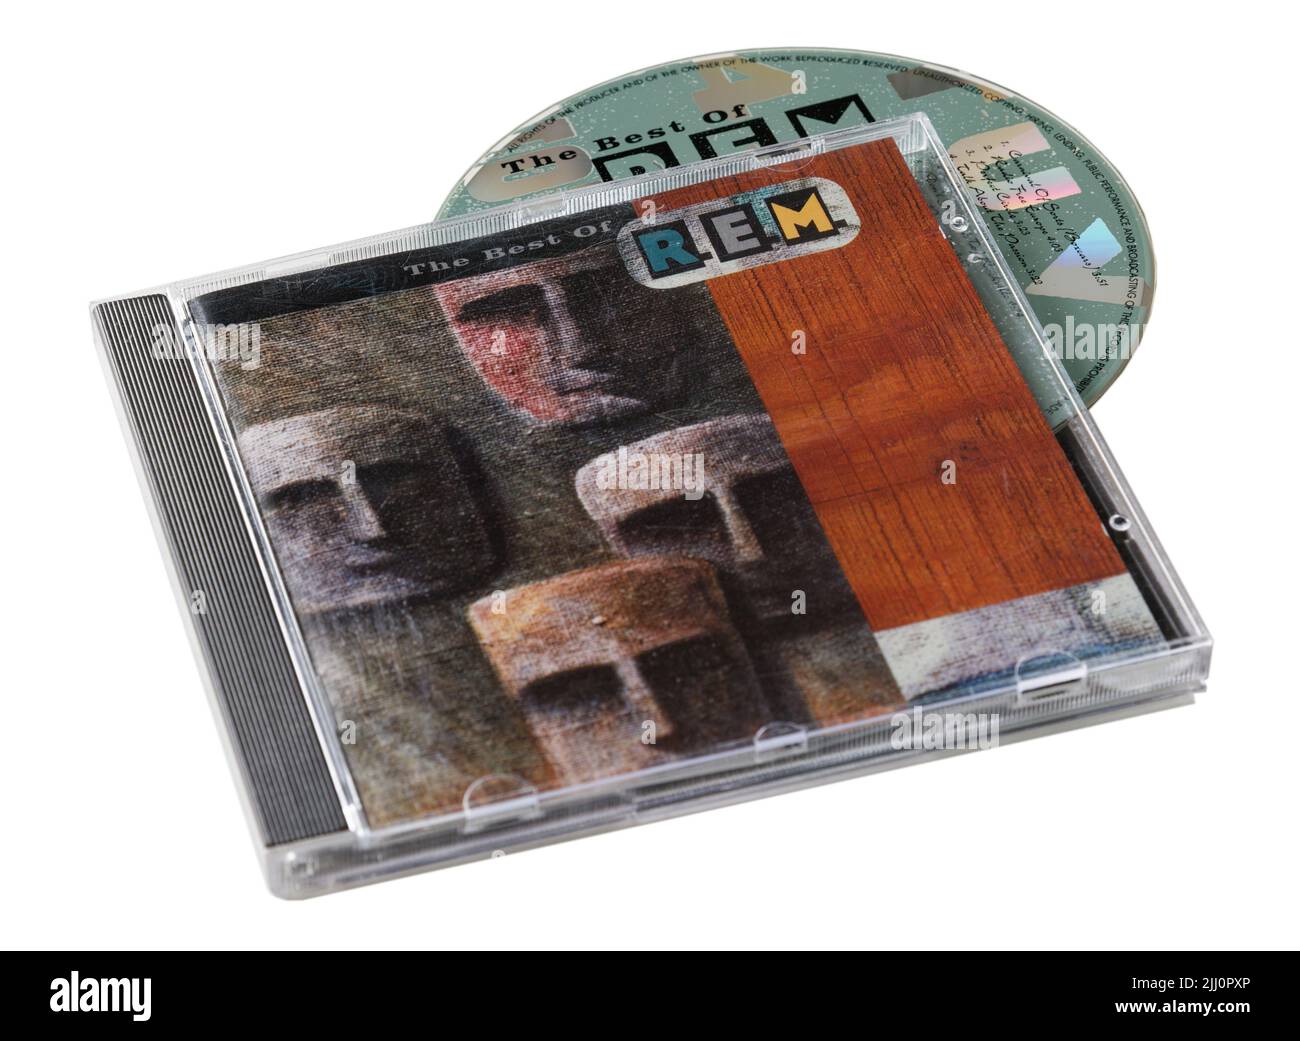 REM Greatest Hits CD Stock Photo